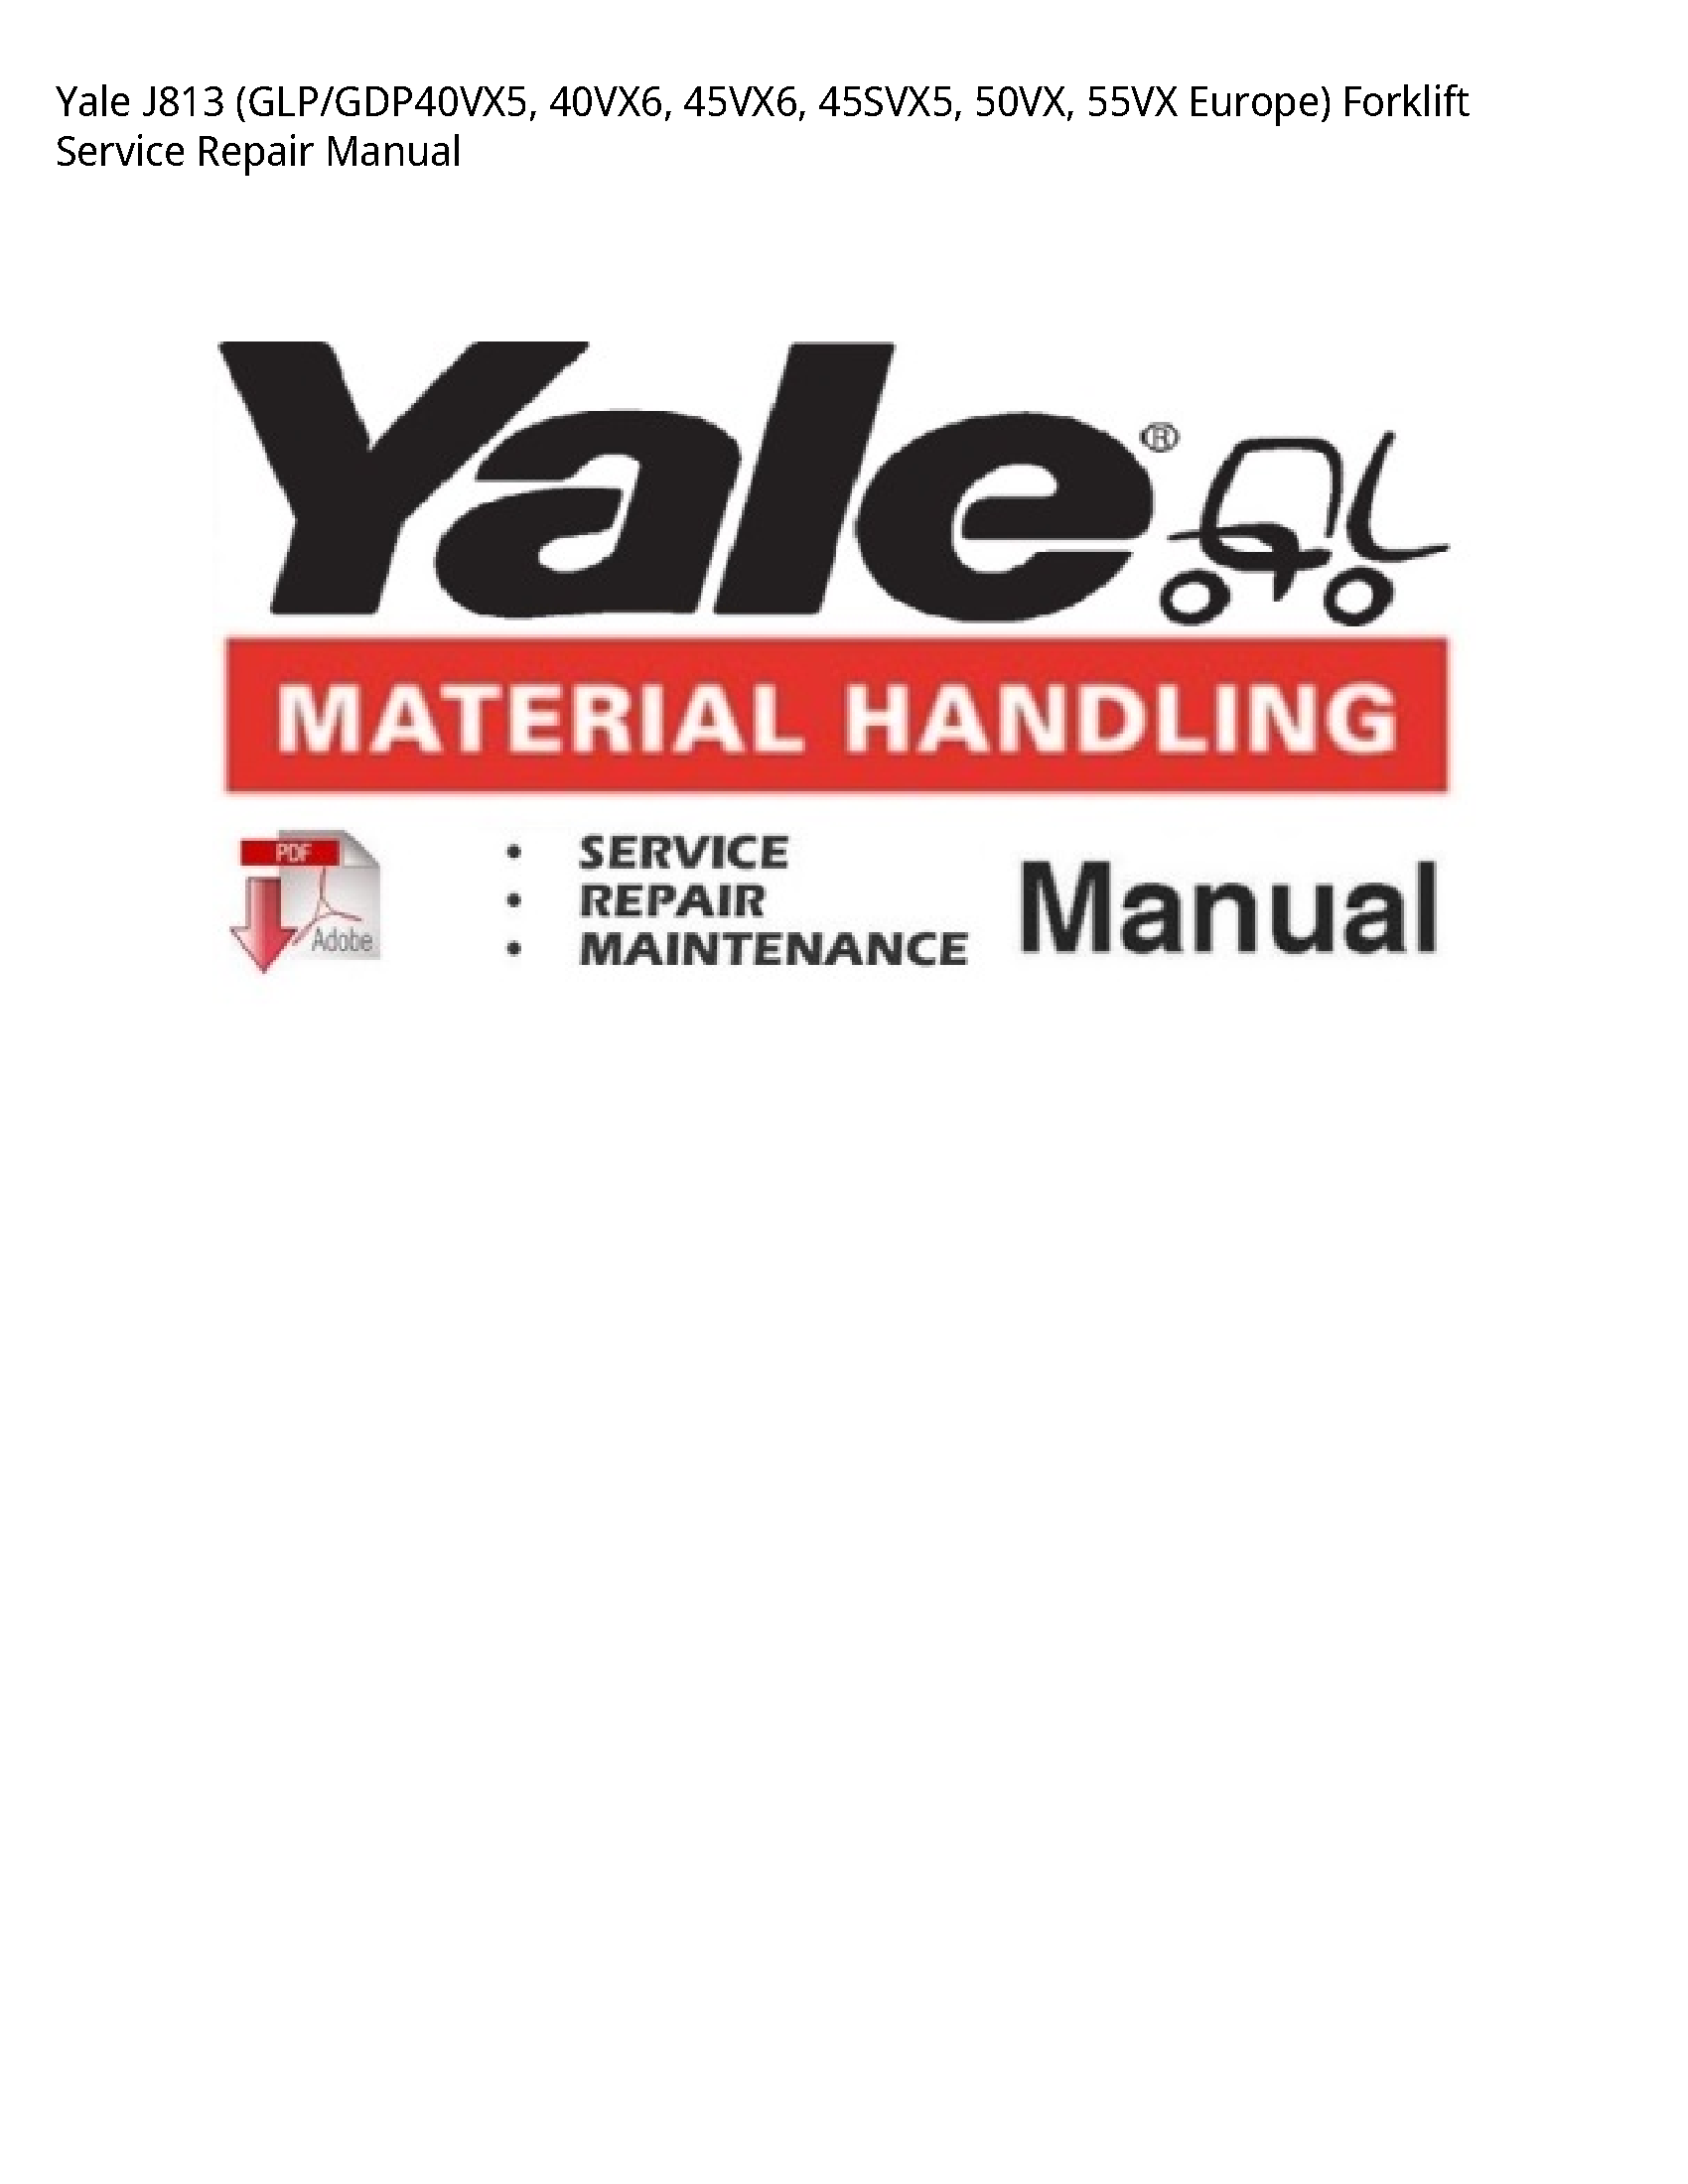 Yale J813 Europe) Forklift manual